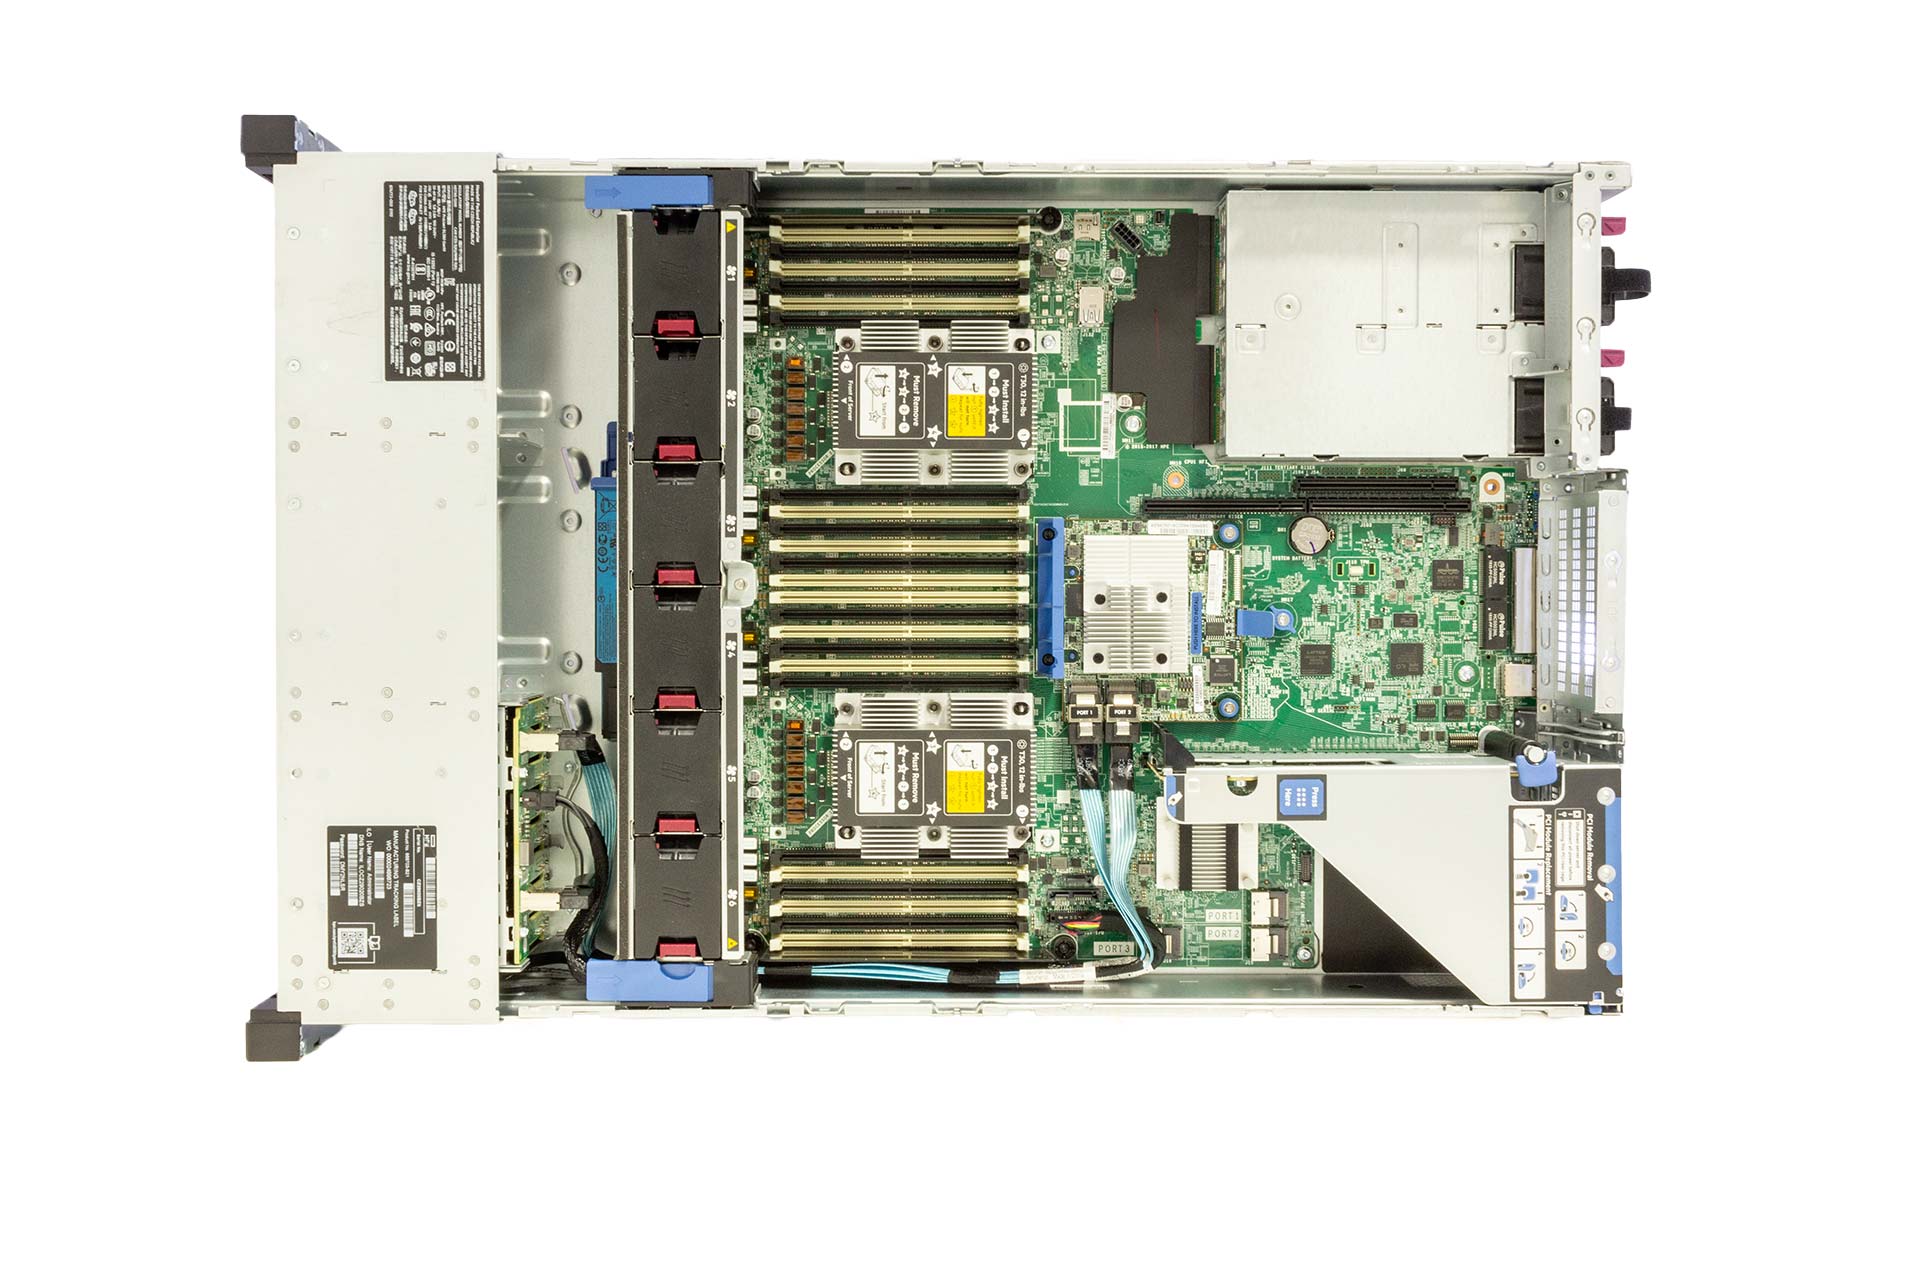 HPE ProLiant DL380 Gen10 Rack-Server, 2x Gold 6142 2.60GHz, 16-Core, 128GB RAM, 8x 480GB SSD, P408i